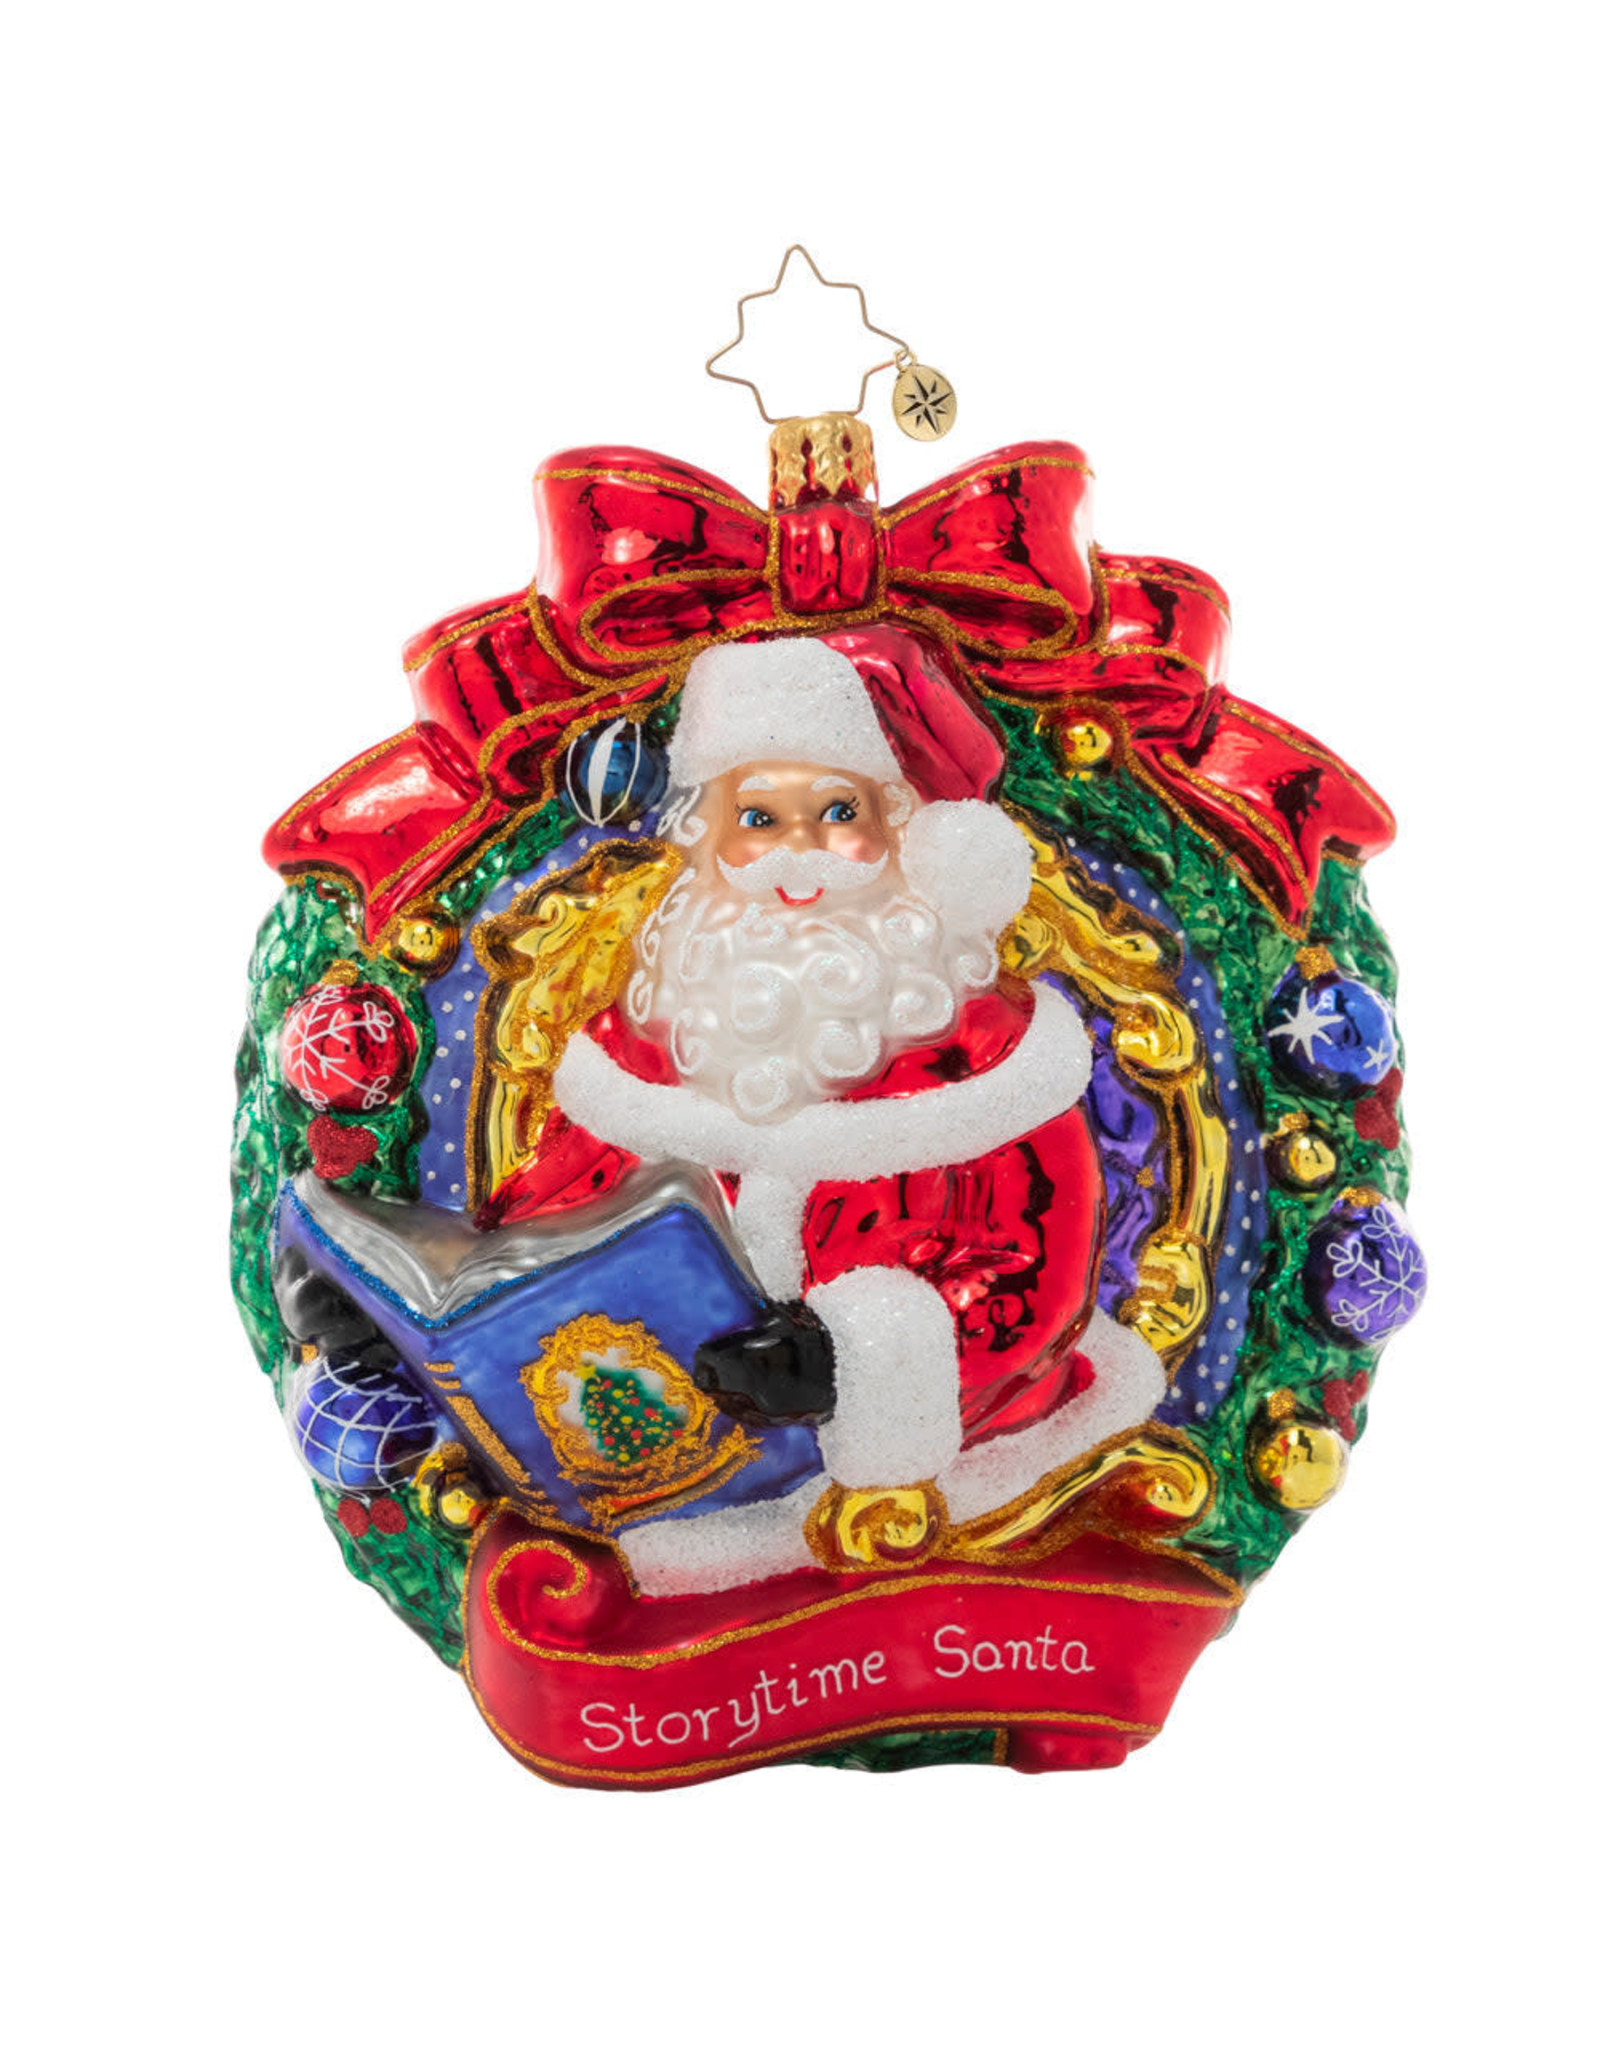 Christopher Radko Santas Story Time Christmas Ornament